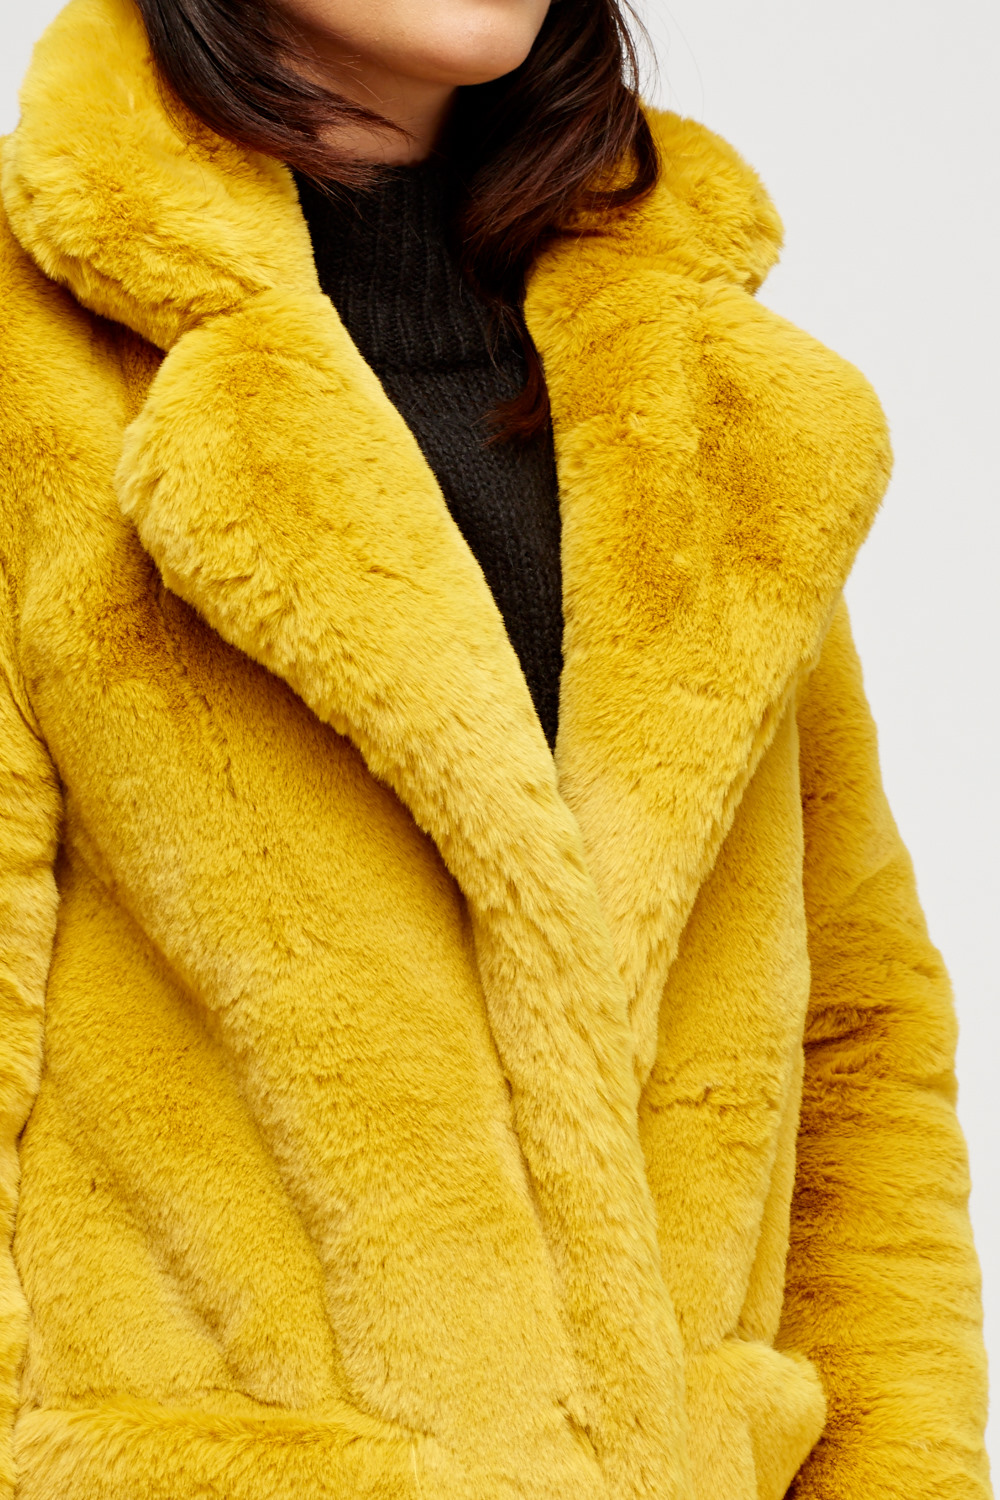 K.ZELL Mustard Teddy Bear Faux Fur Coat - Limited edition | Discount ...